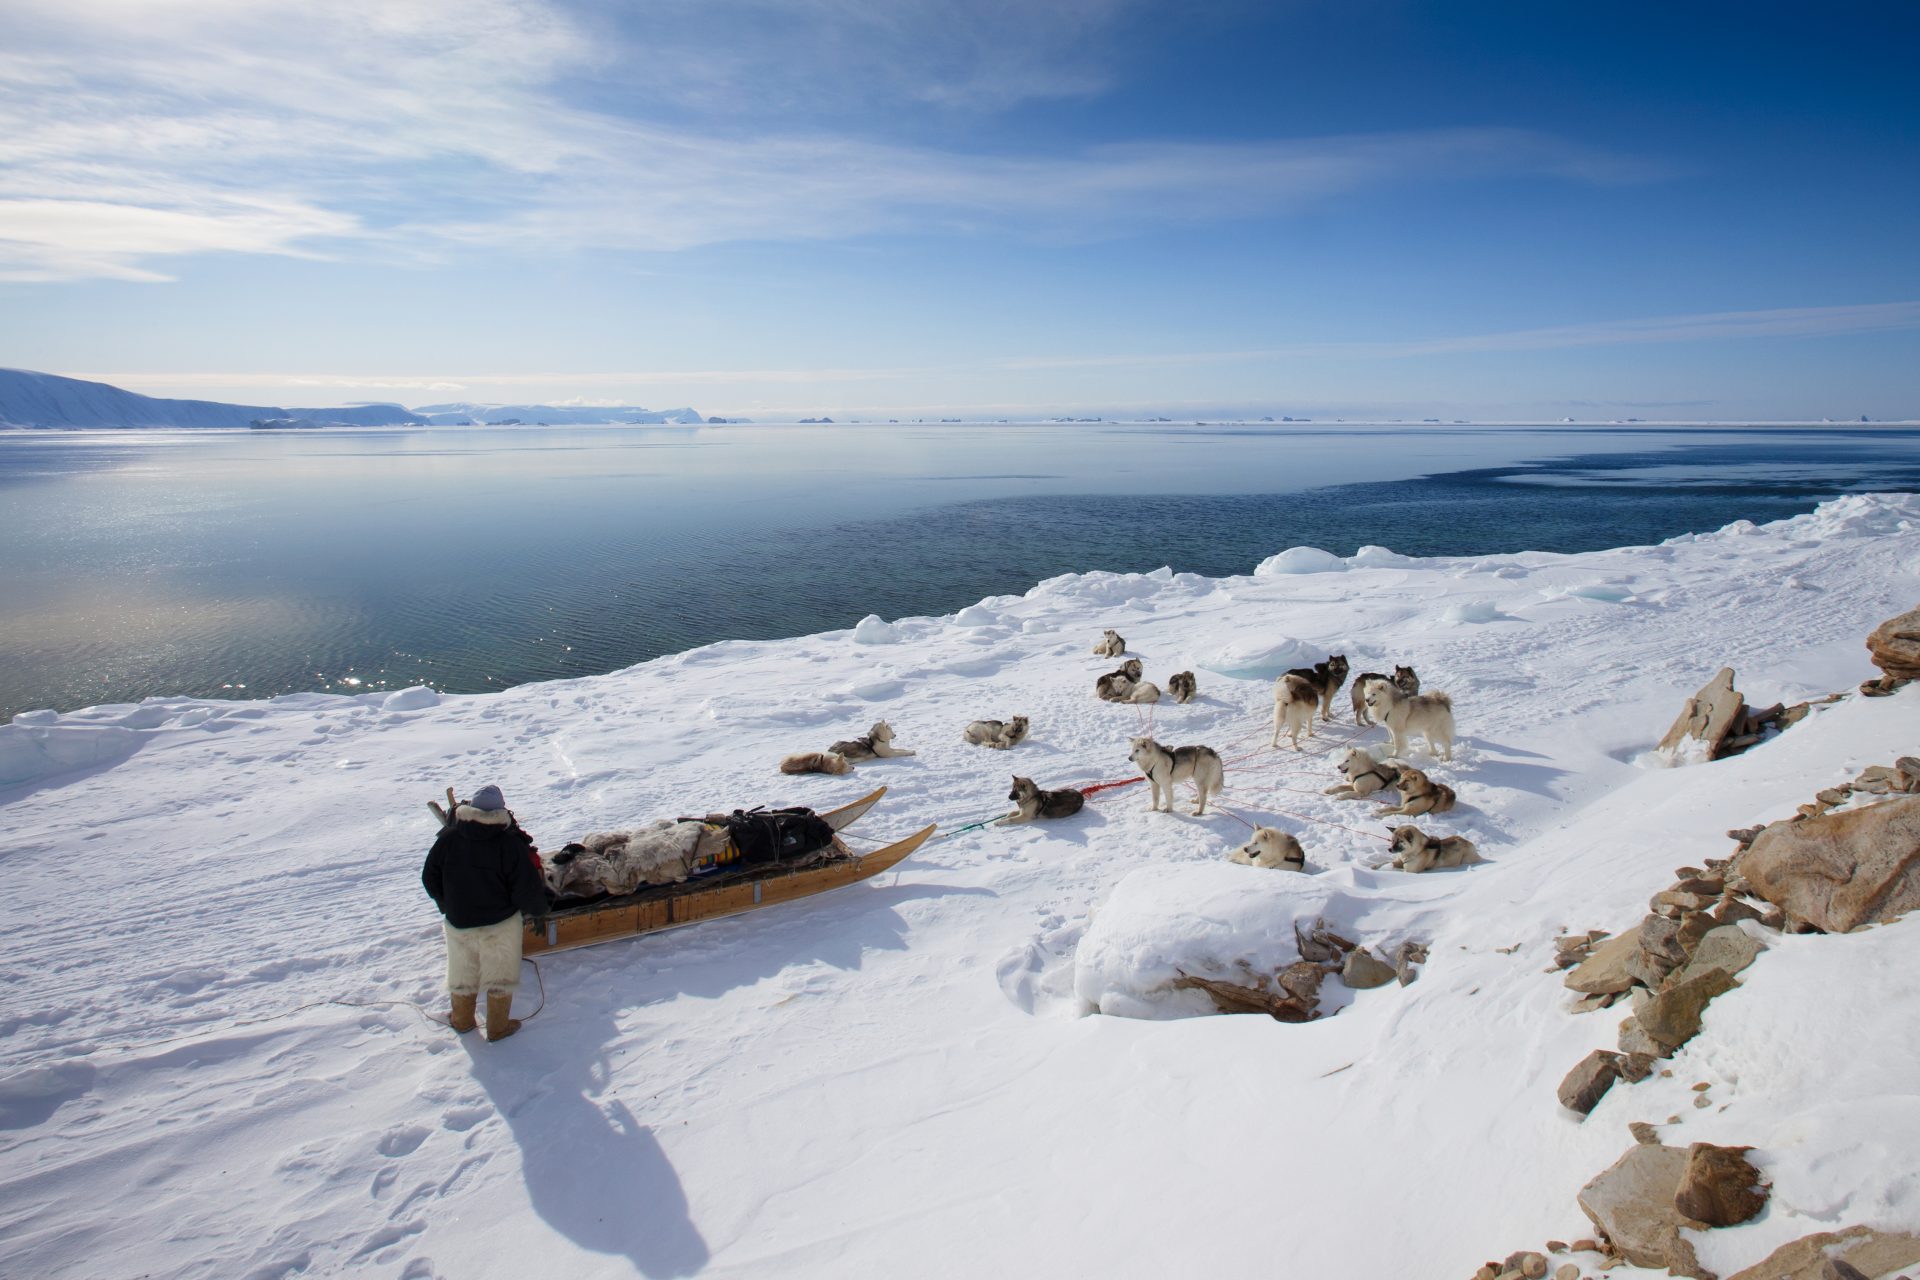 The Inuit language